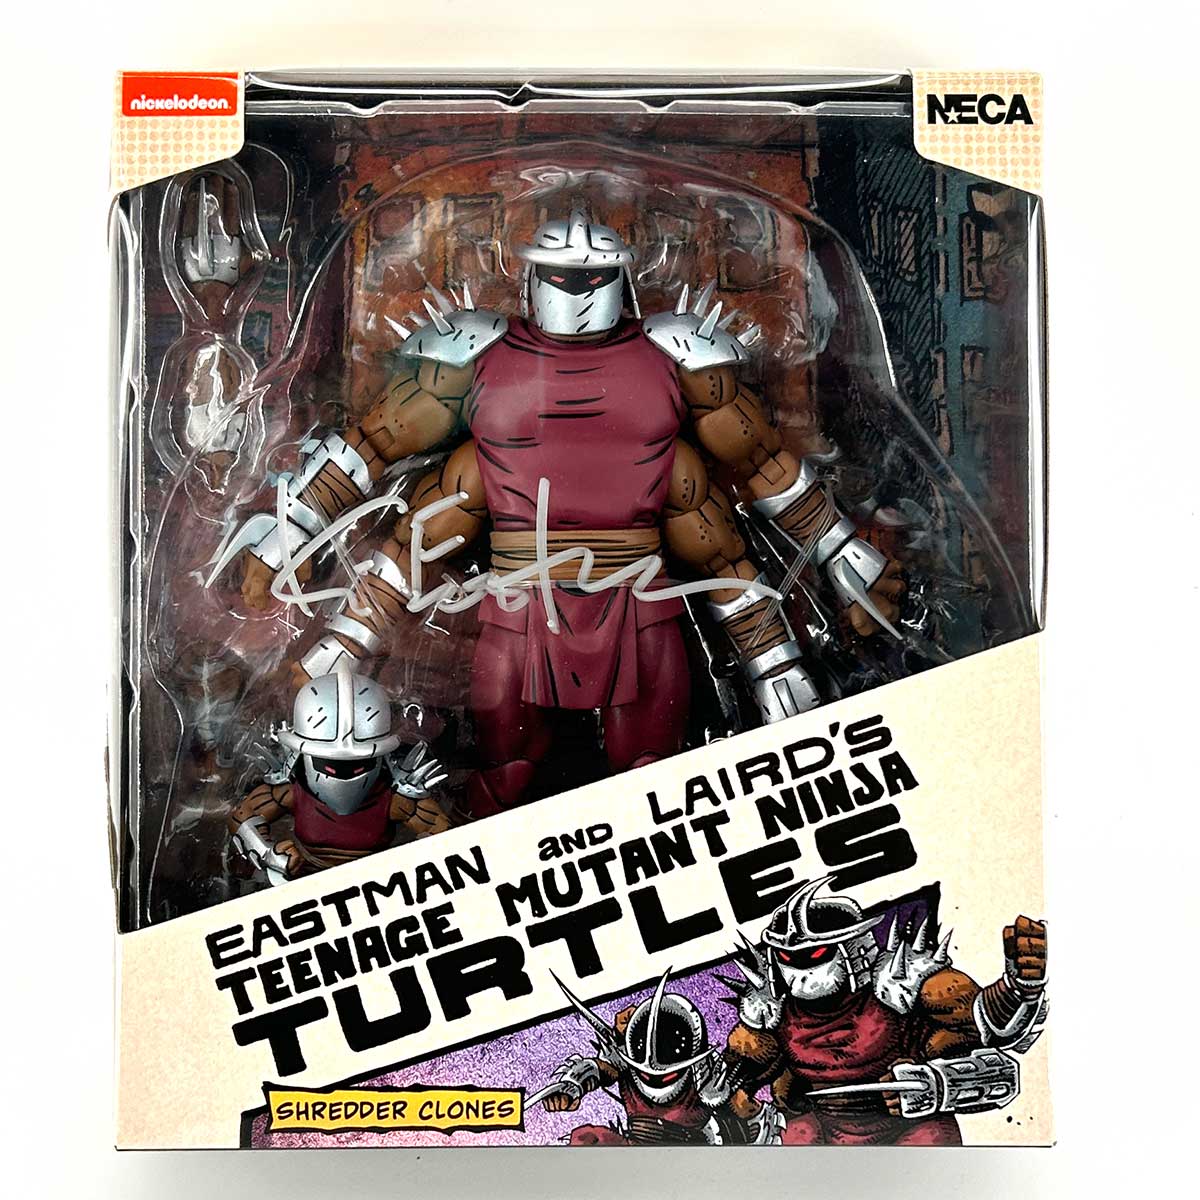 Teenage Mutant Ninja Turtles Deluxe Shredder Clone & Mini Shredder (Mirage  Comics)